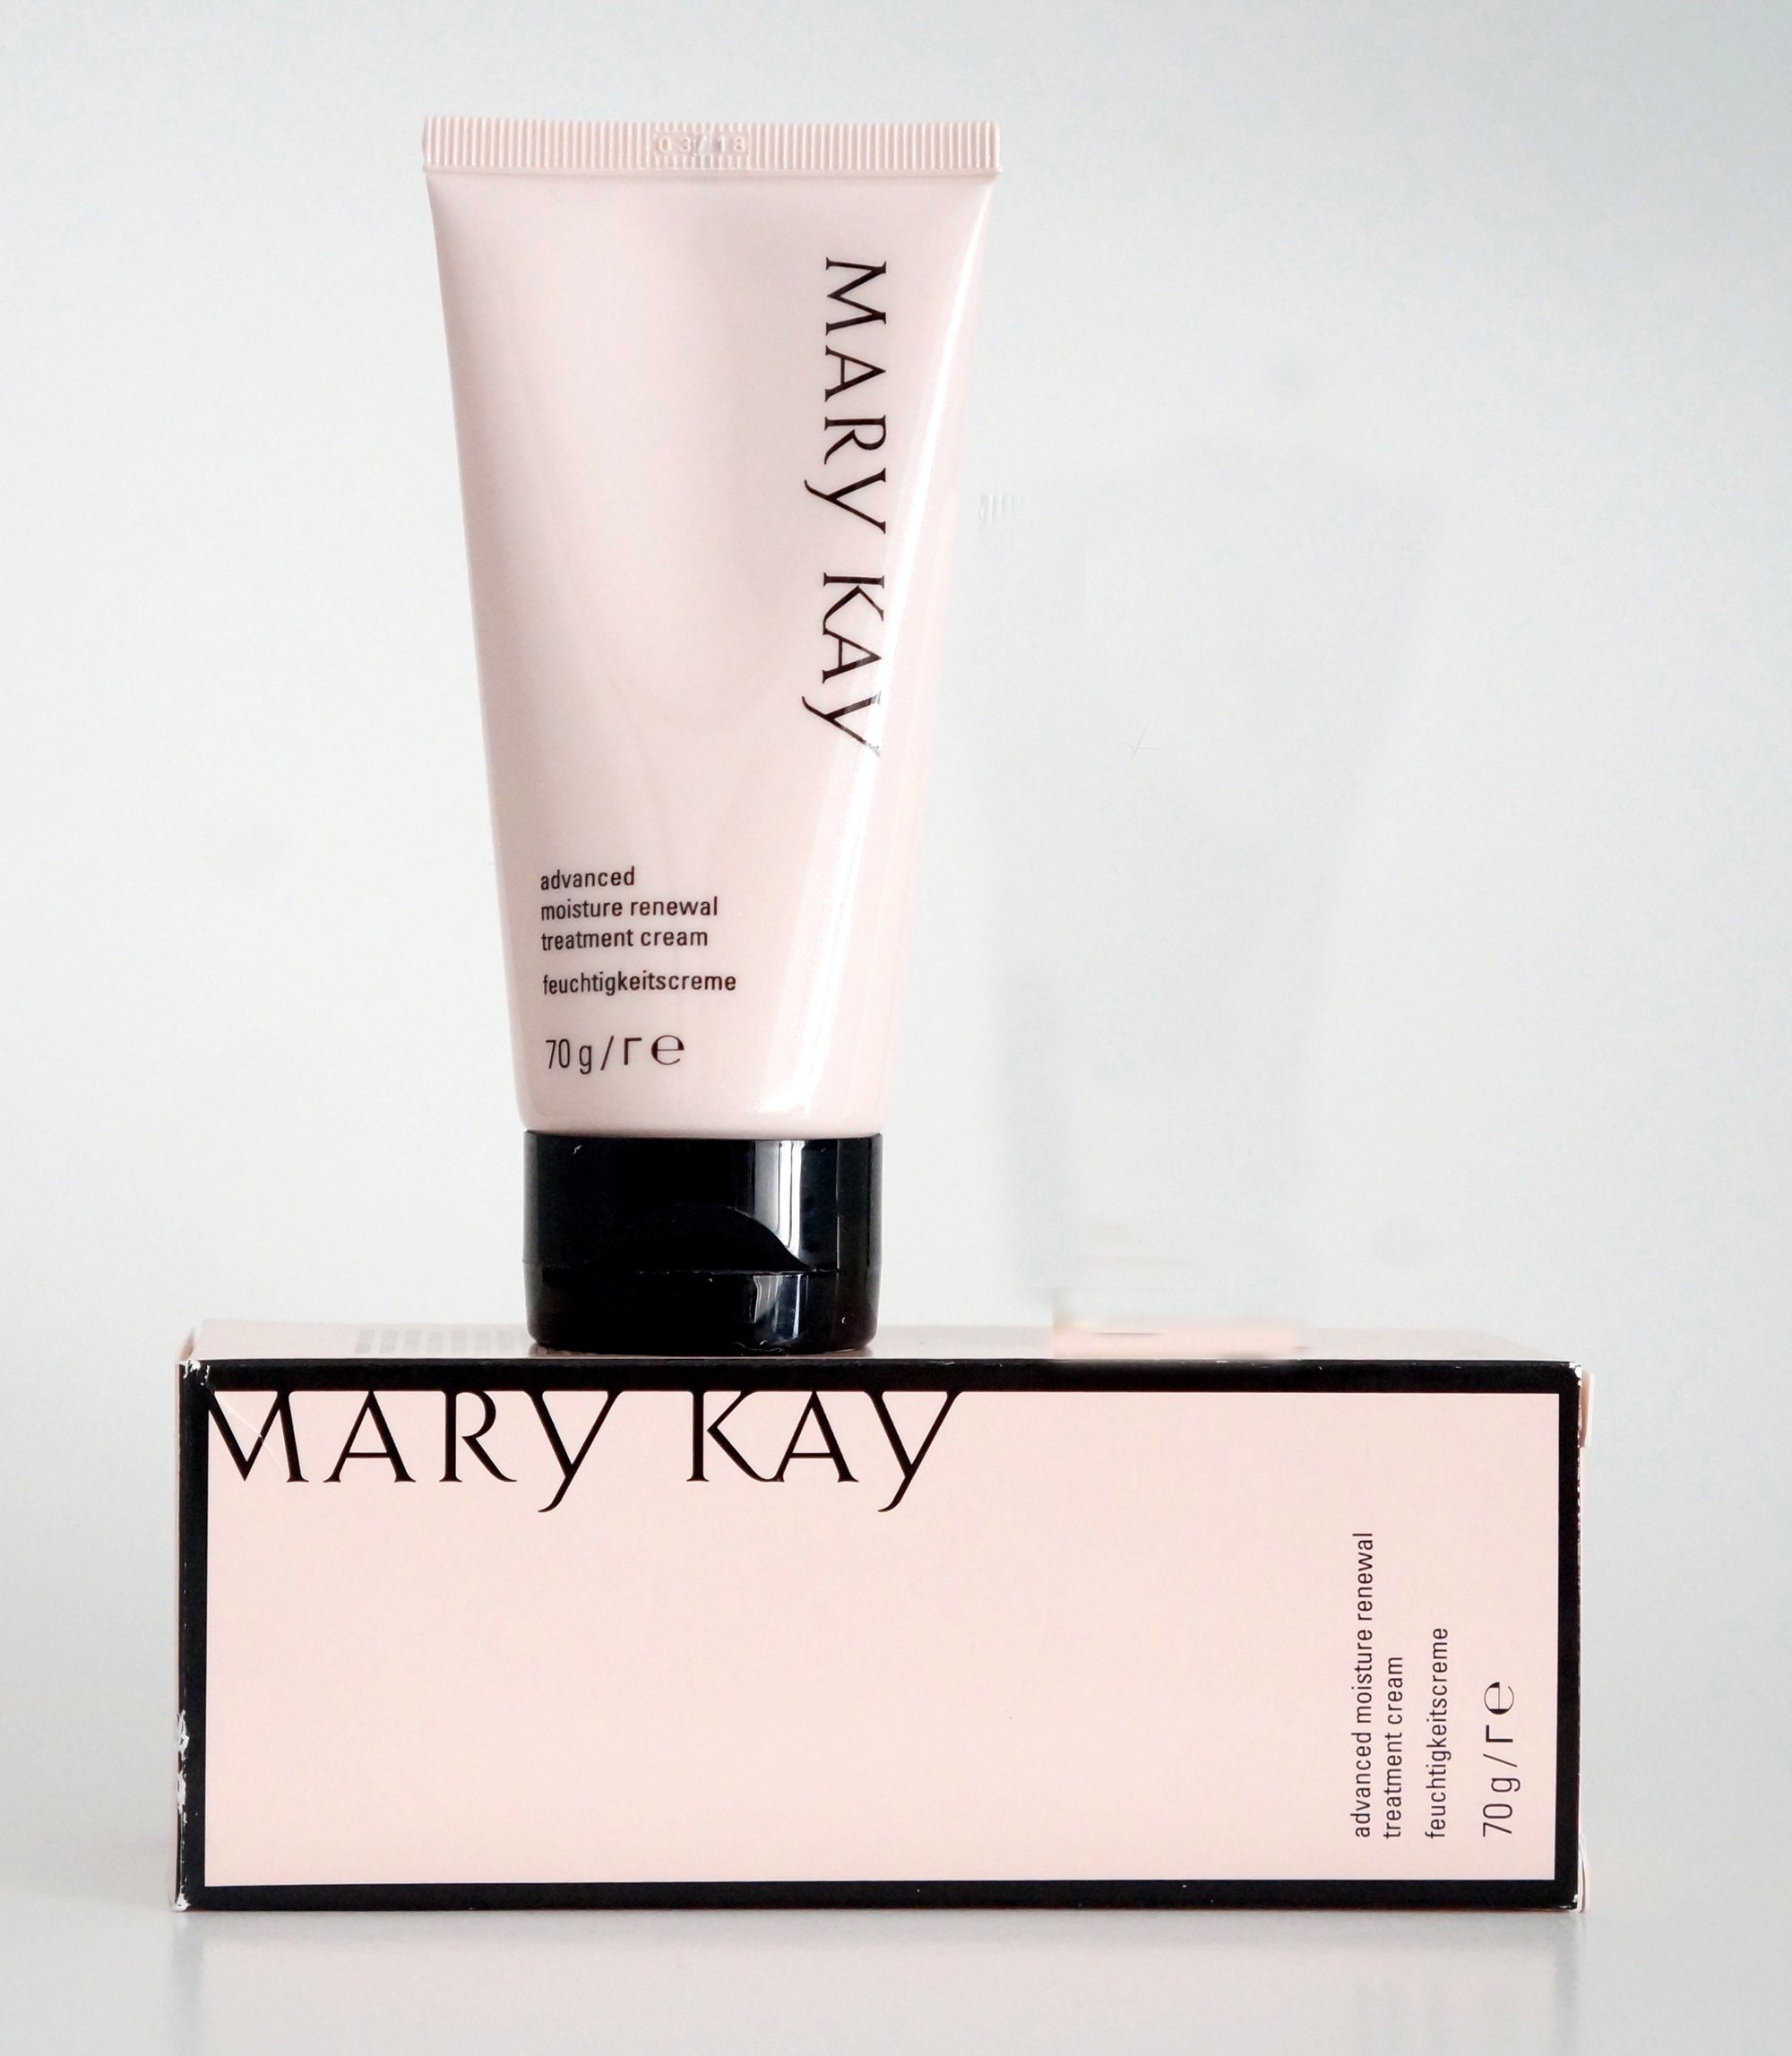 Mary Kay Feuchtigkeitscreme Mary Kay Advanced Moisture Renewal Cream Feuchtigkeitscreme 70g | Tagescremes